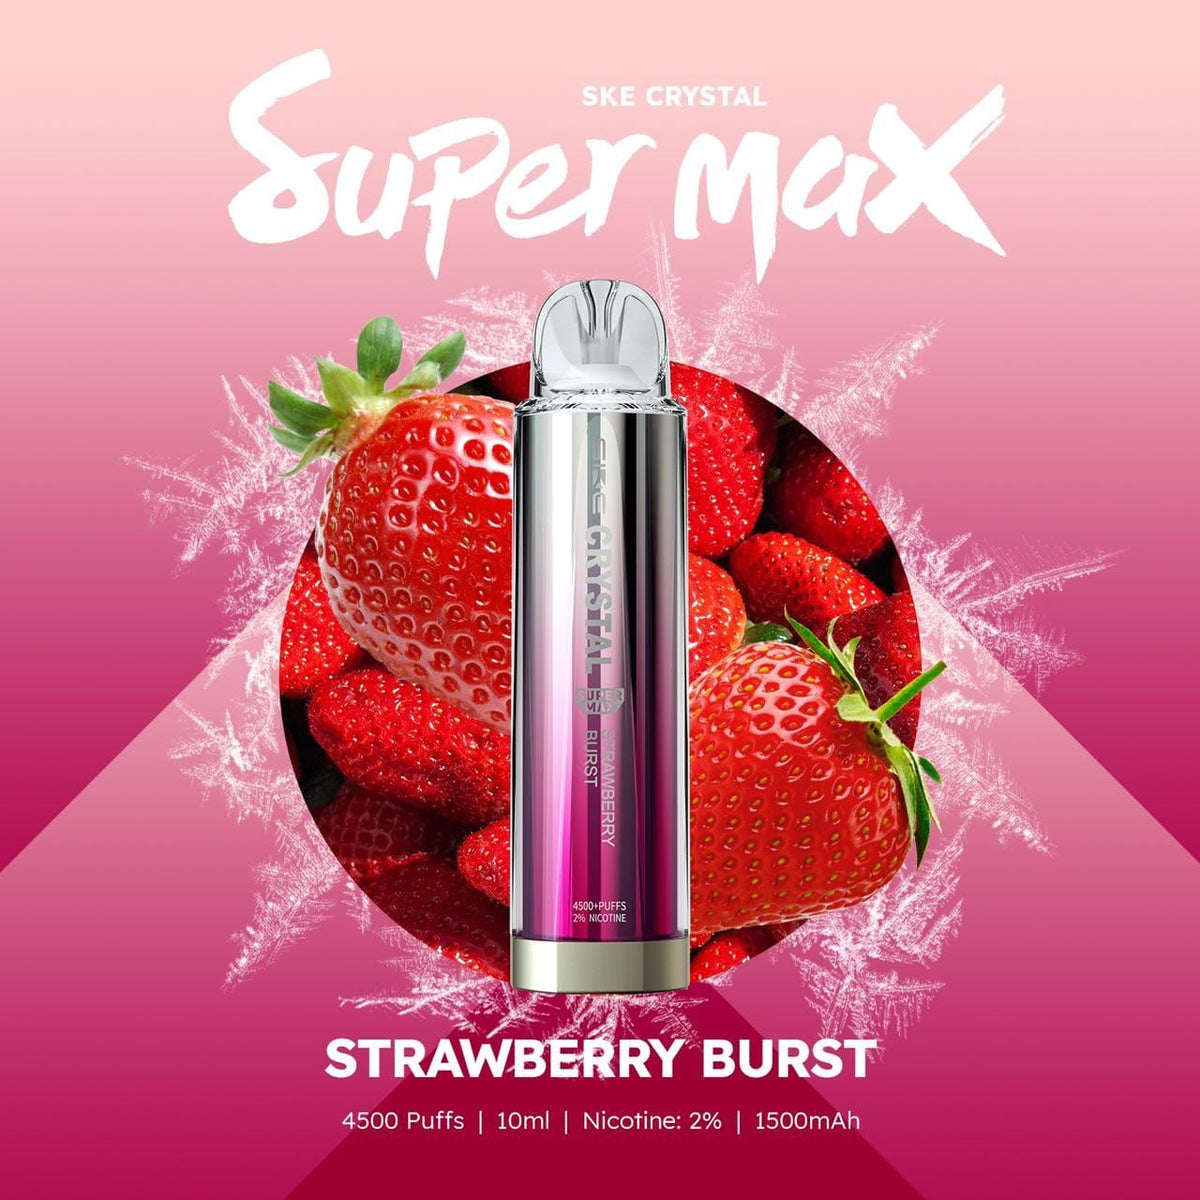 Ske Crystal Super Max 4500 Disposable Vape Pod #Simbavapes#